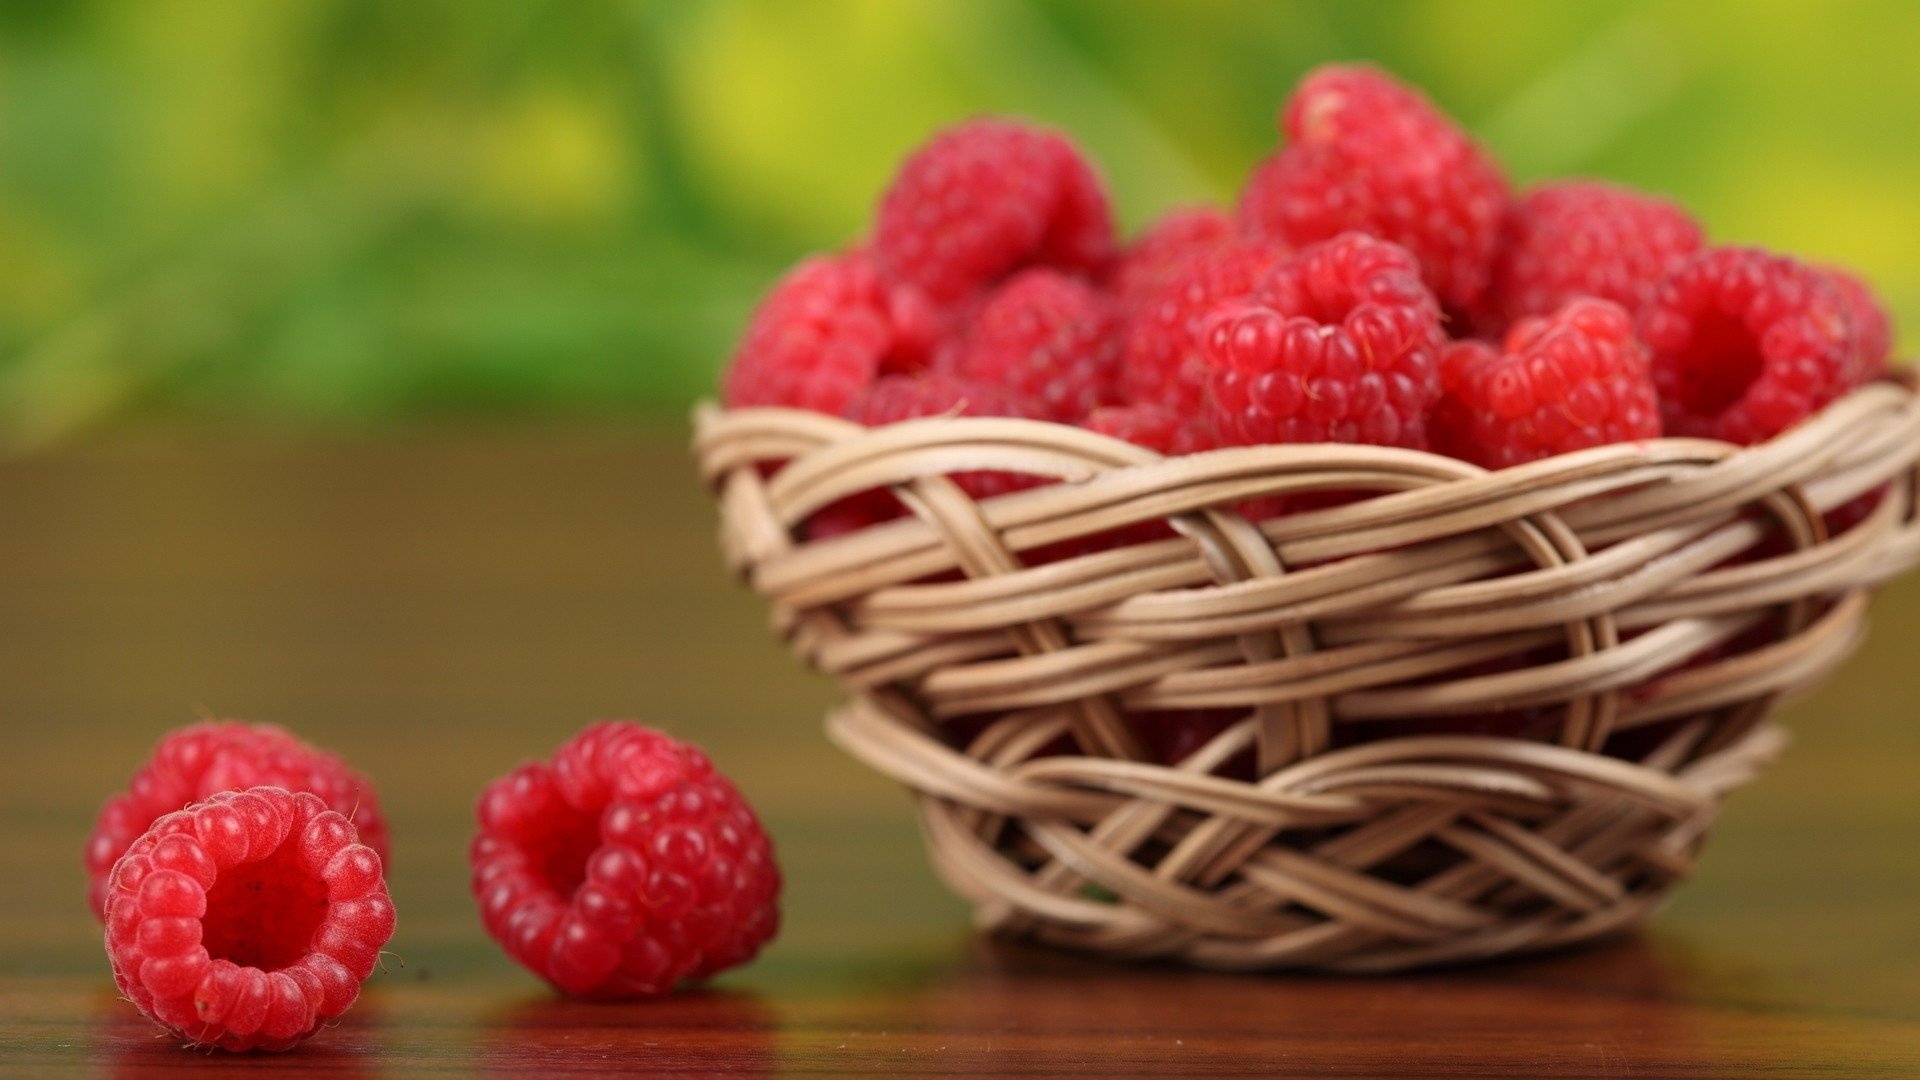 Raspberry wallpapers, Vibrant fruit, Refreshing snack, Bursting with antioxidants, 1920x1080 Full HD Desktop